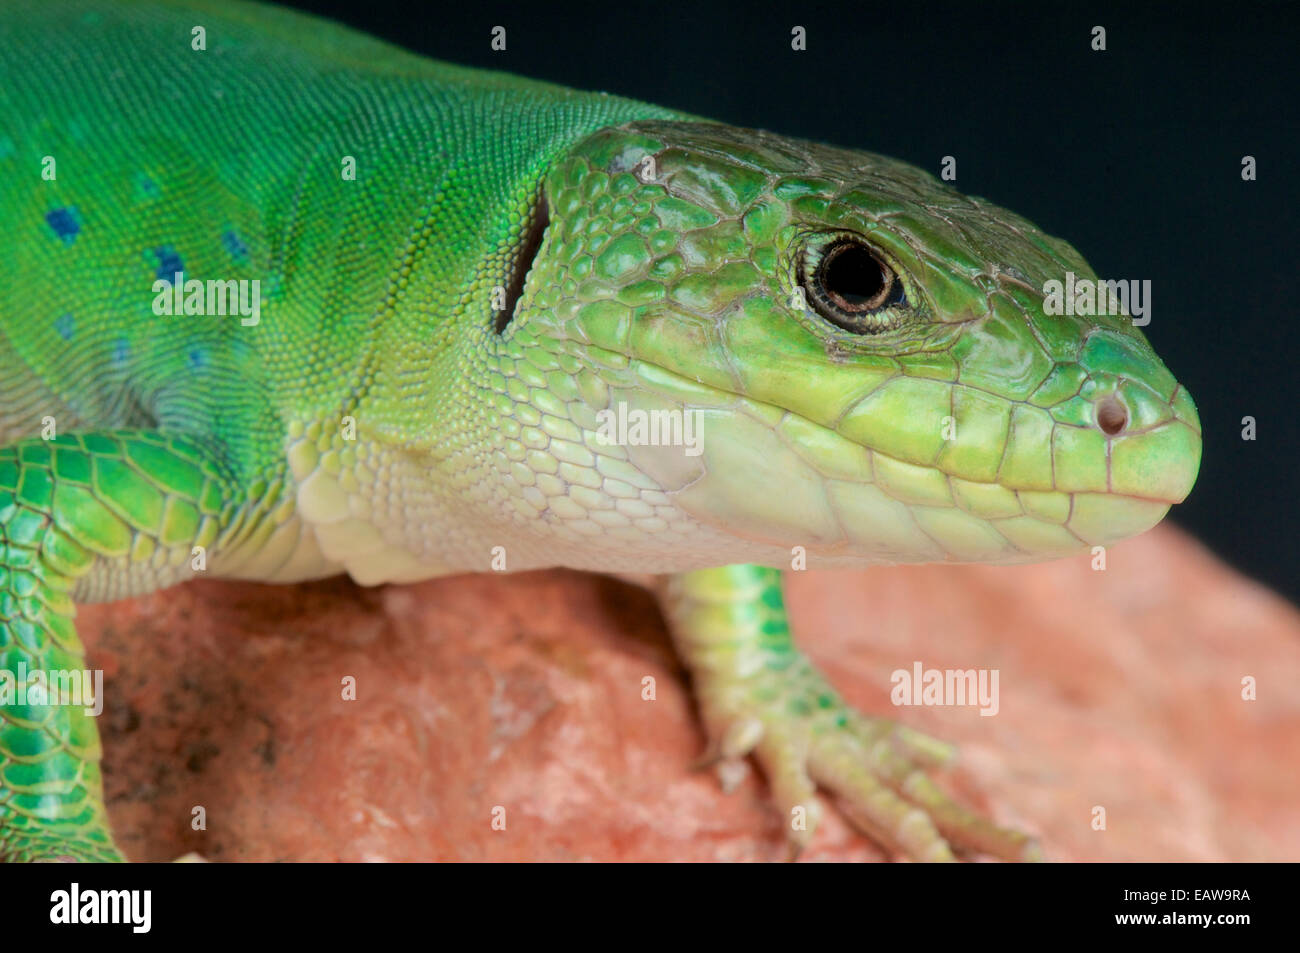 Eyed marocchino lizard / Timon tangitanus Foto Stock